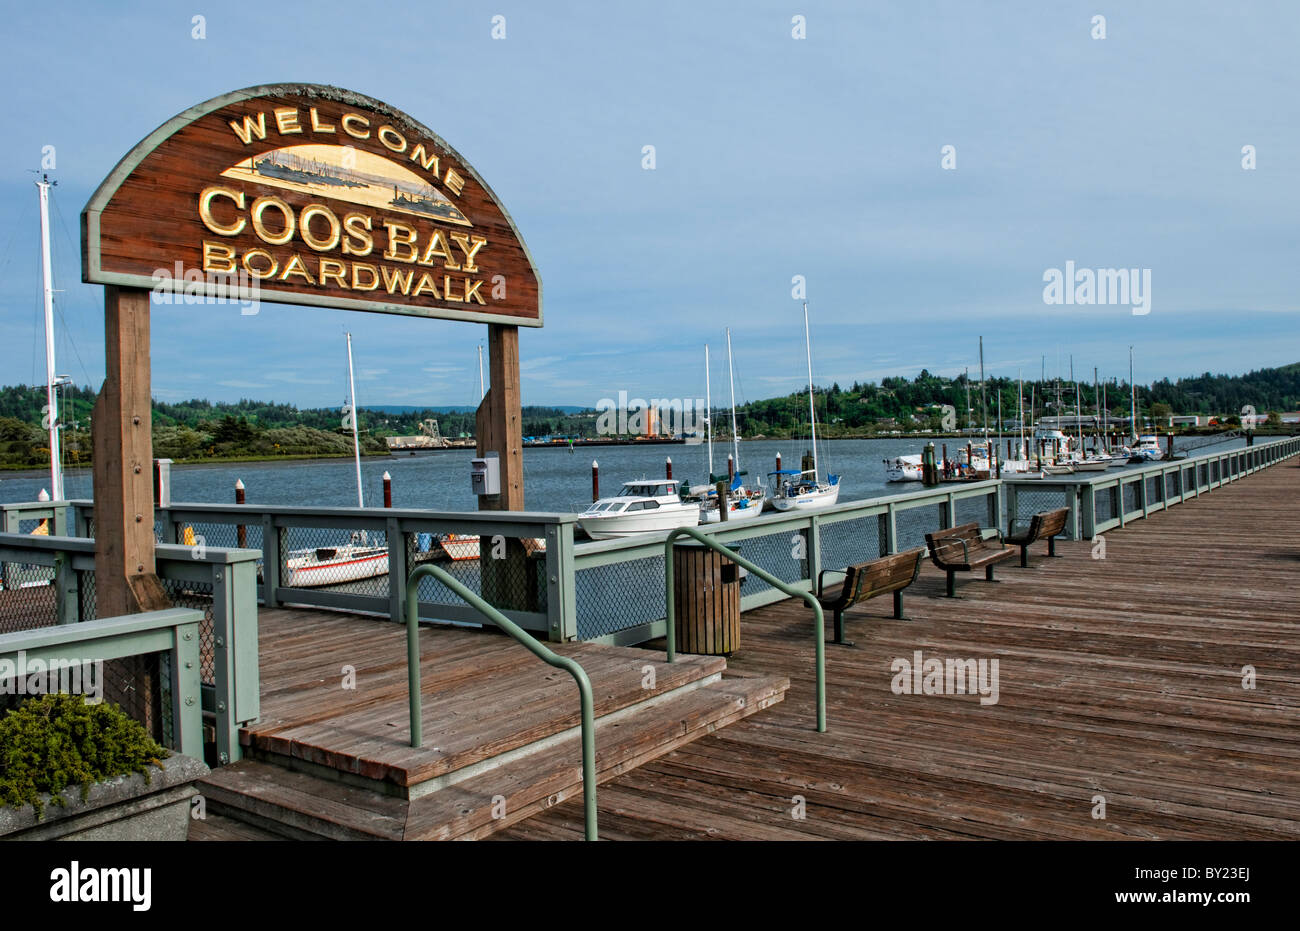 Boardwalk and Harbor in Coos Bay Oregon on Oregon coast Stock Photo